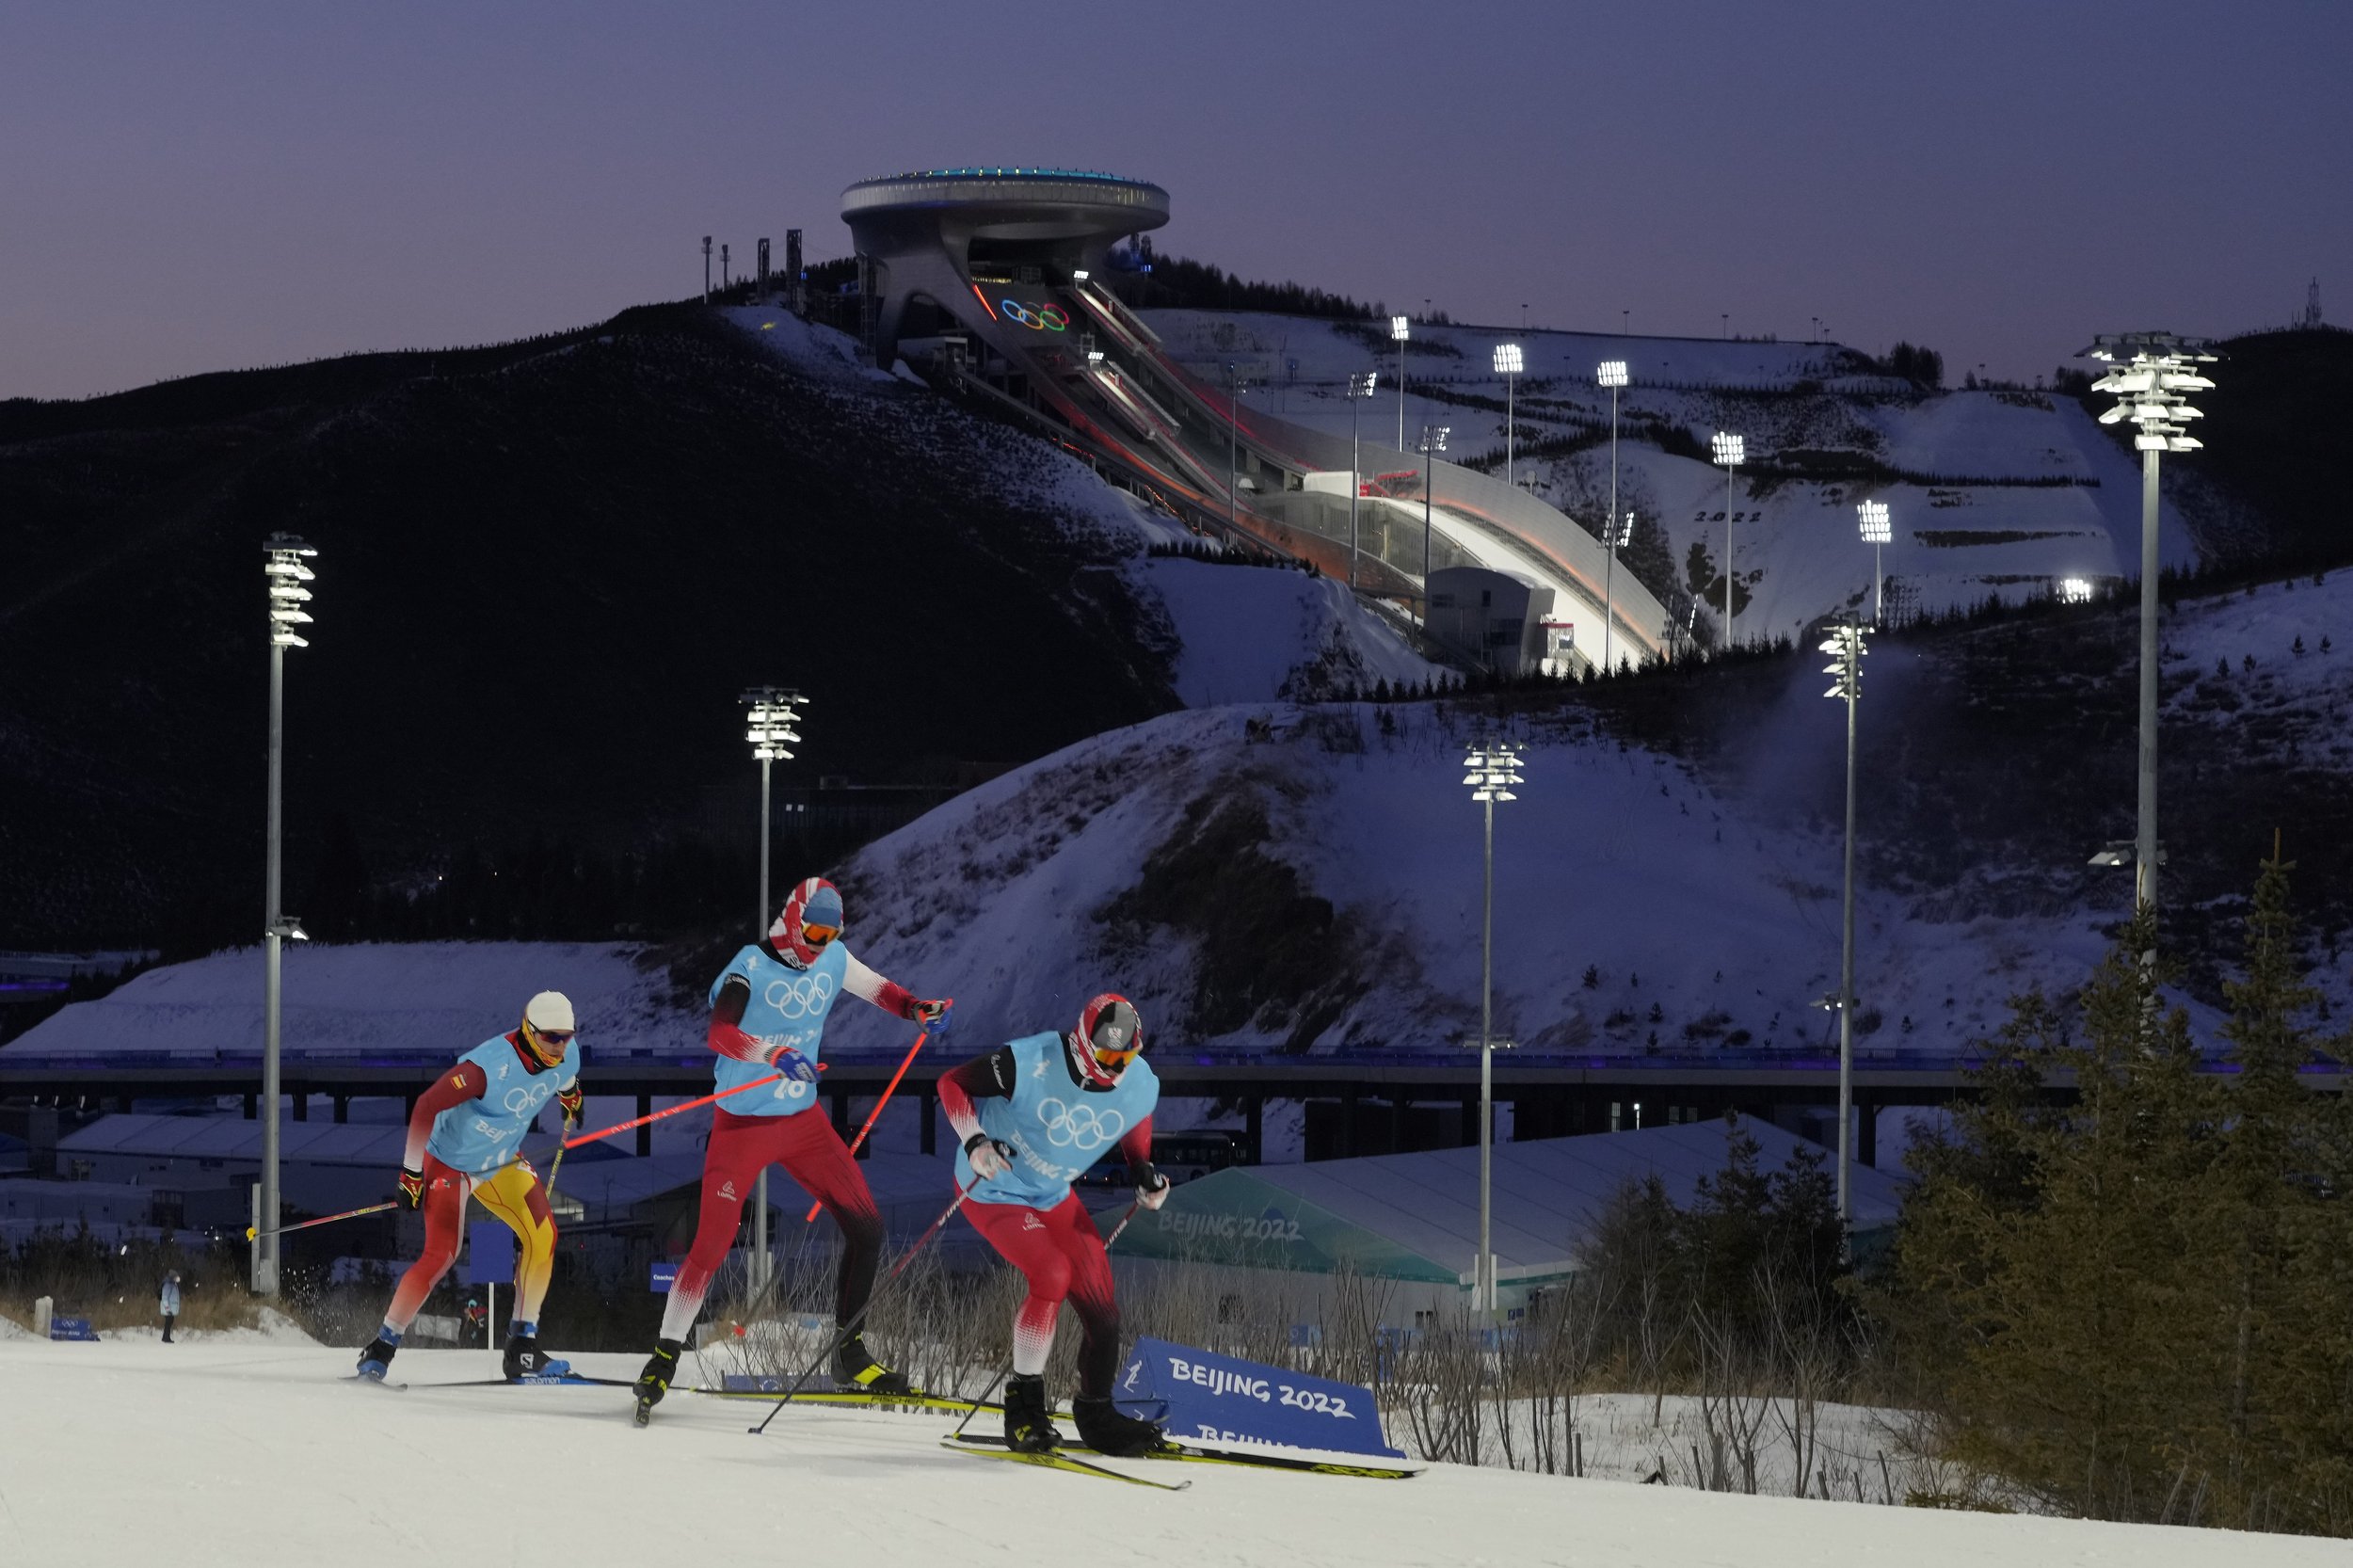  Skiers train in cross-country skiing practice before the 2022 Winter Olympics, Wednesday, Feb. 2, 2022, in Zhangjiakou, China. (AP Photo/Alessandra Tarantino) 